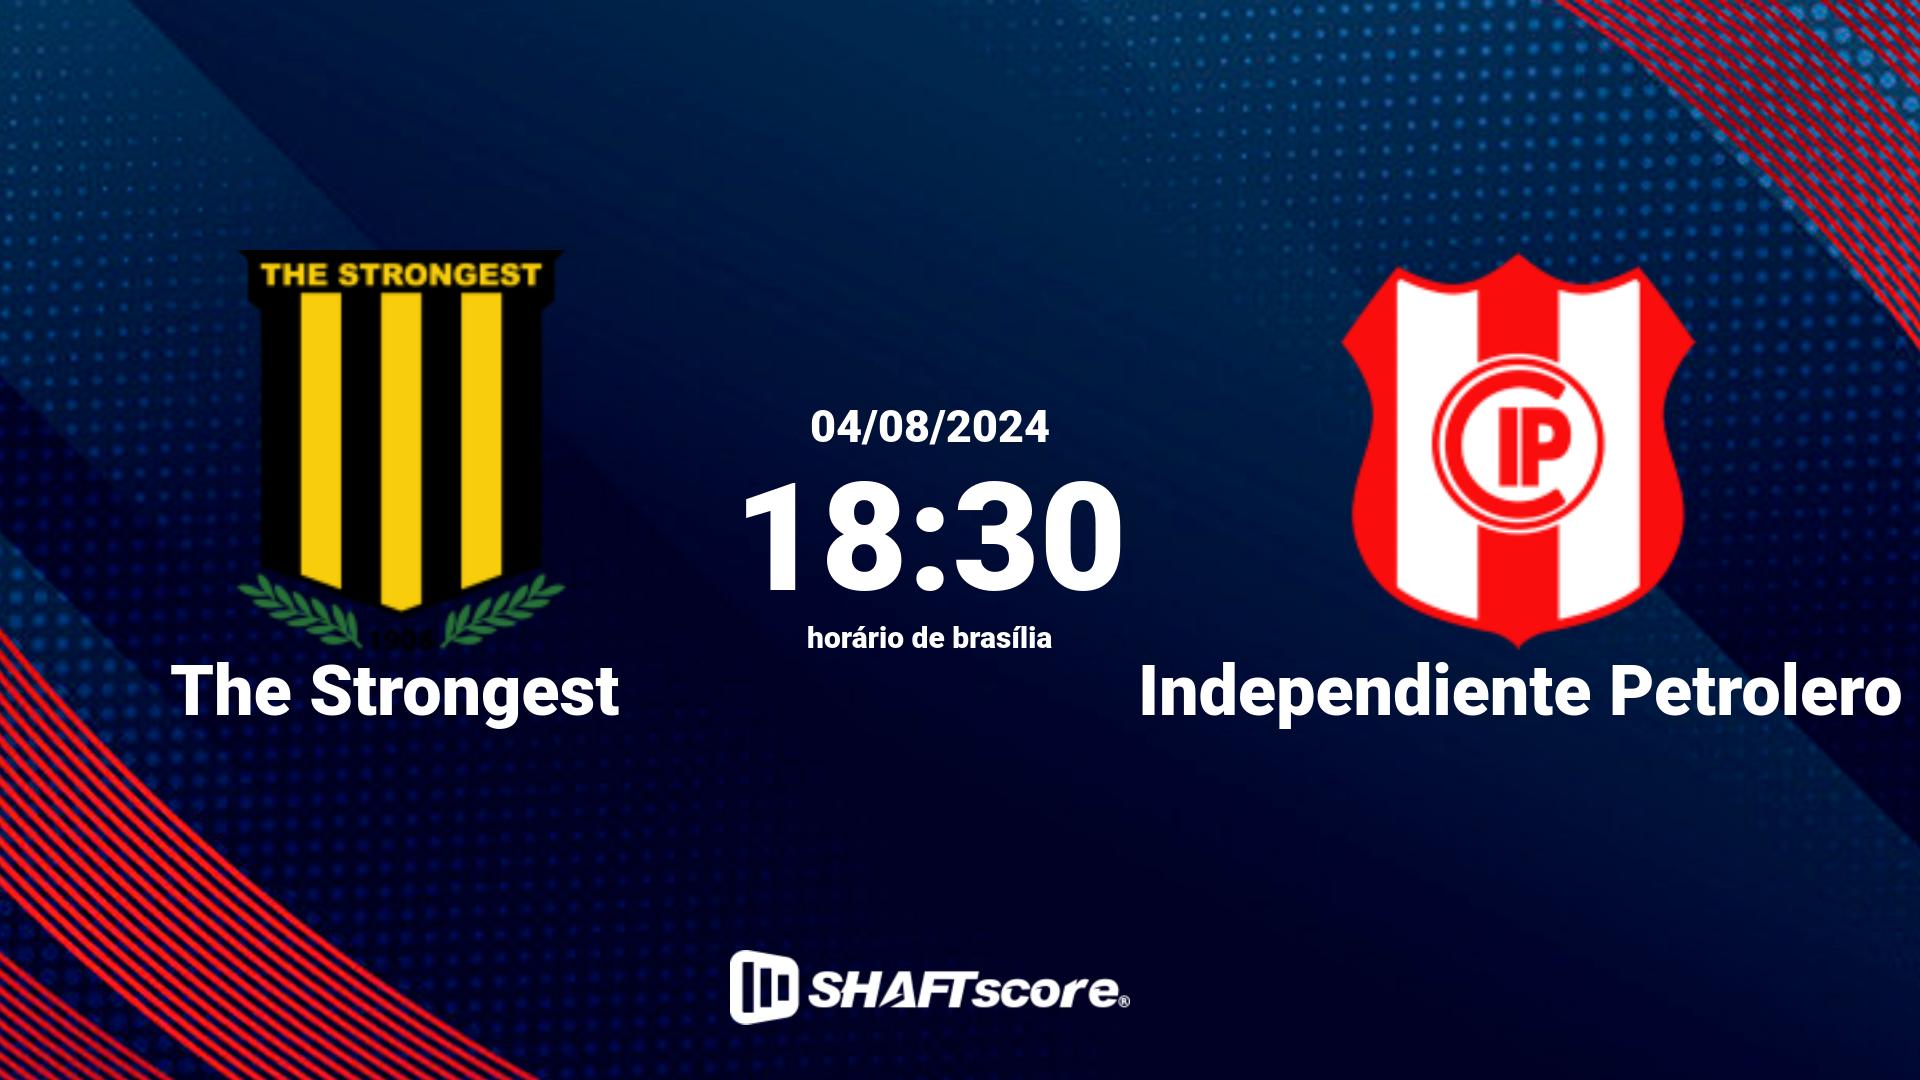 Estatísticas do jogo The Strongest vs Independiente Petrolero 04.08 18:30